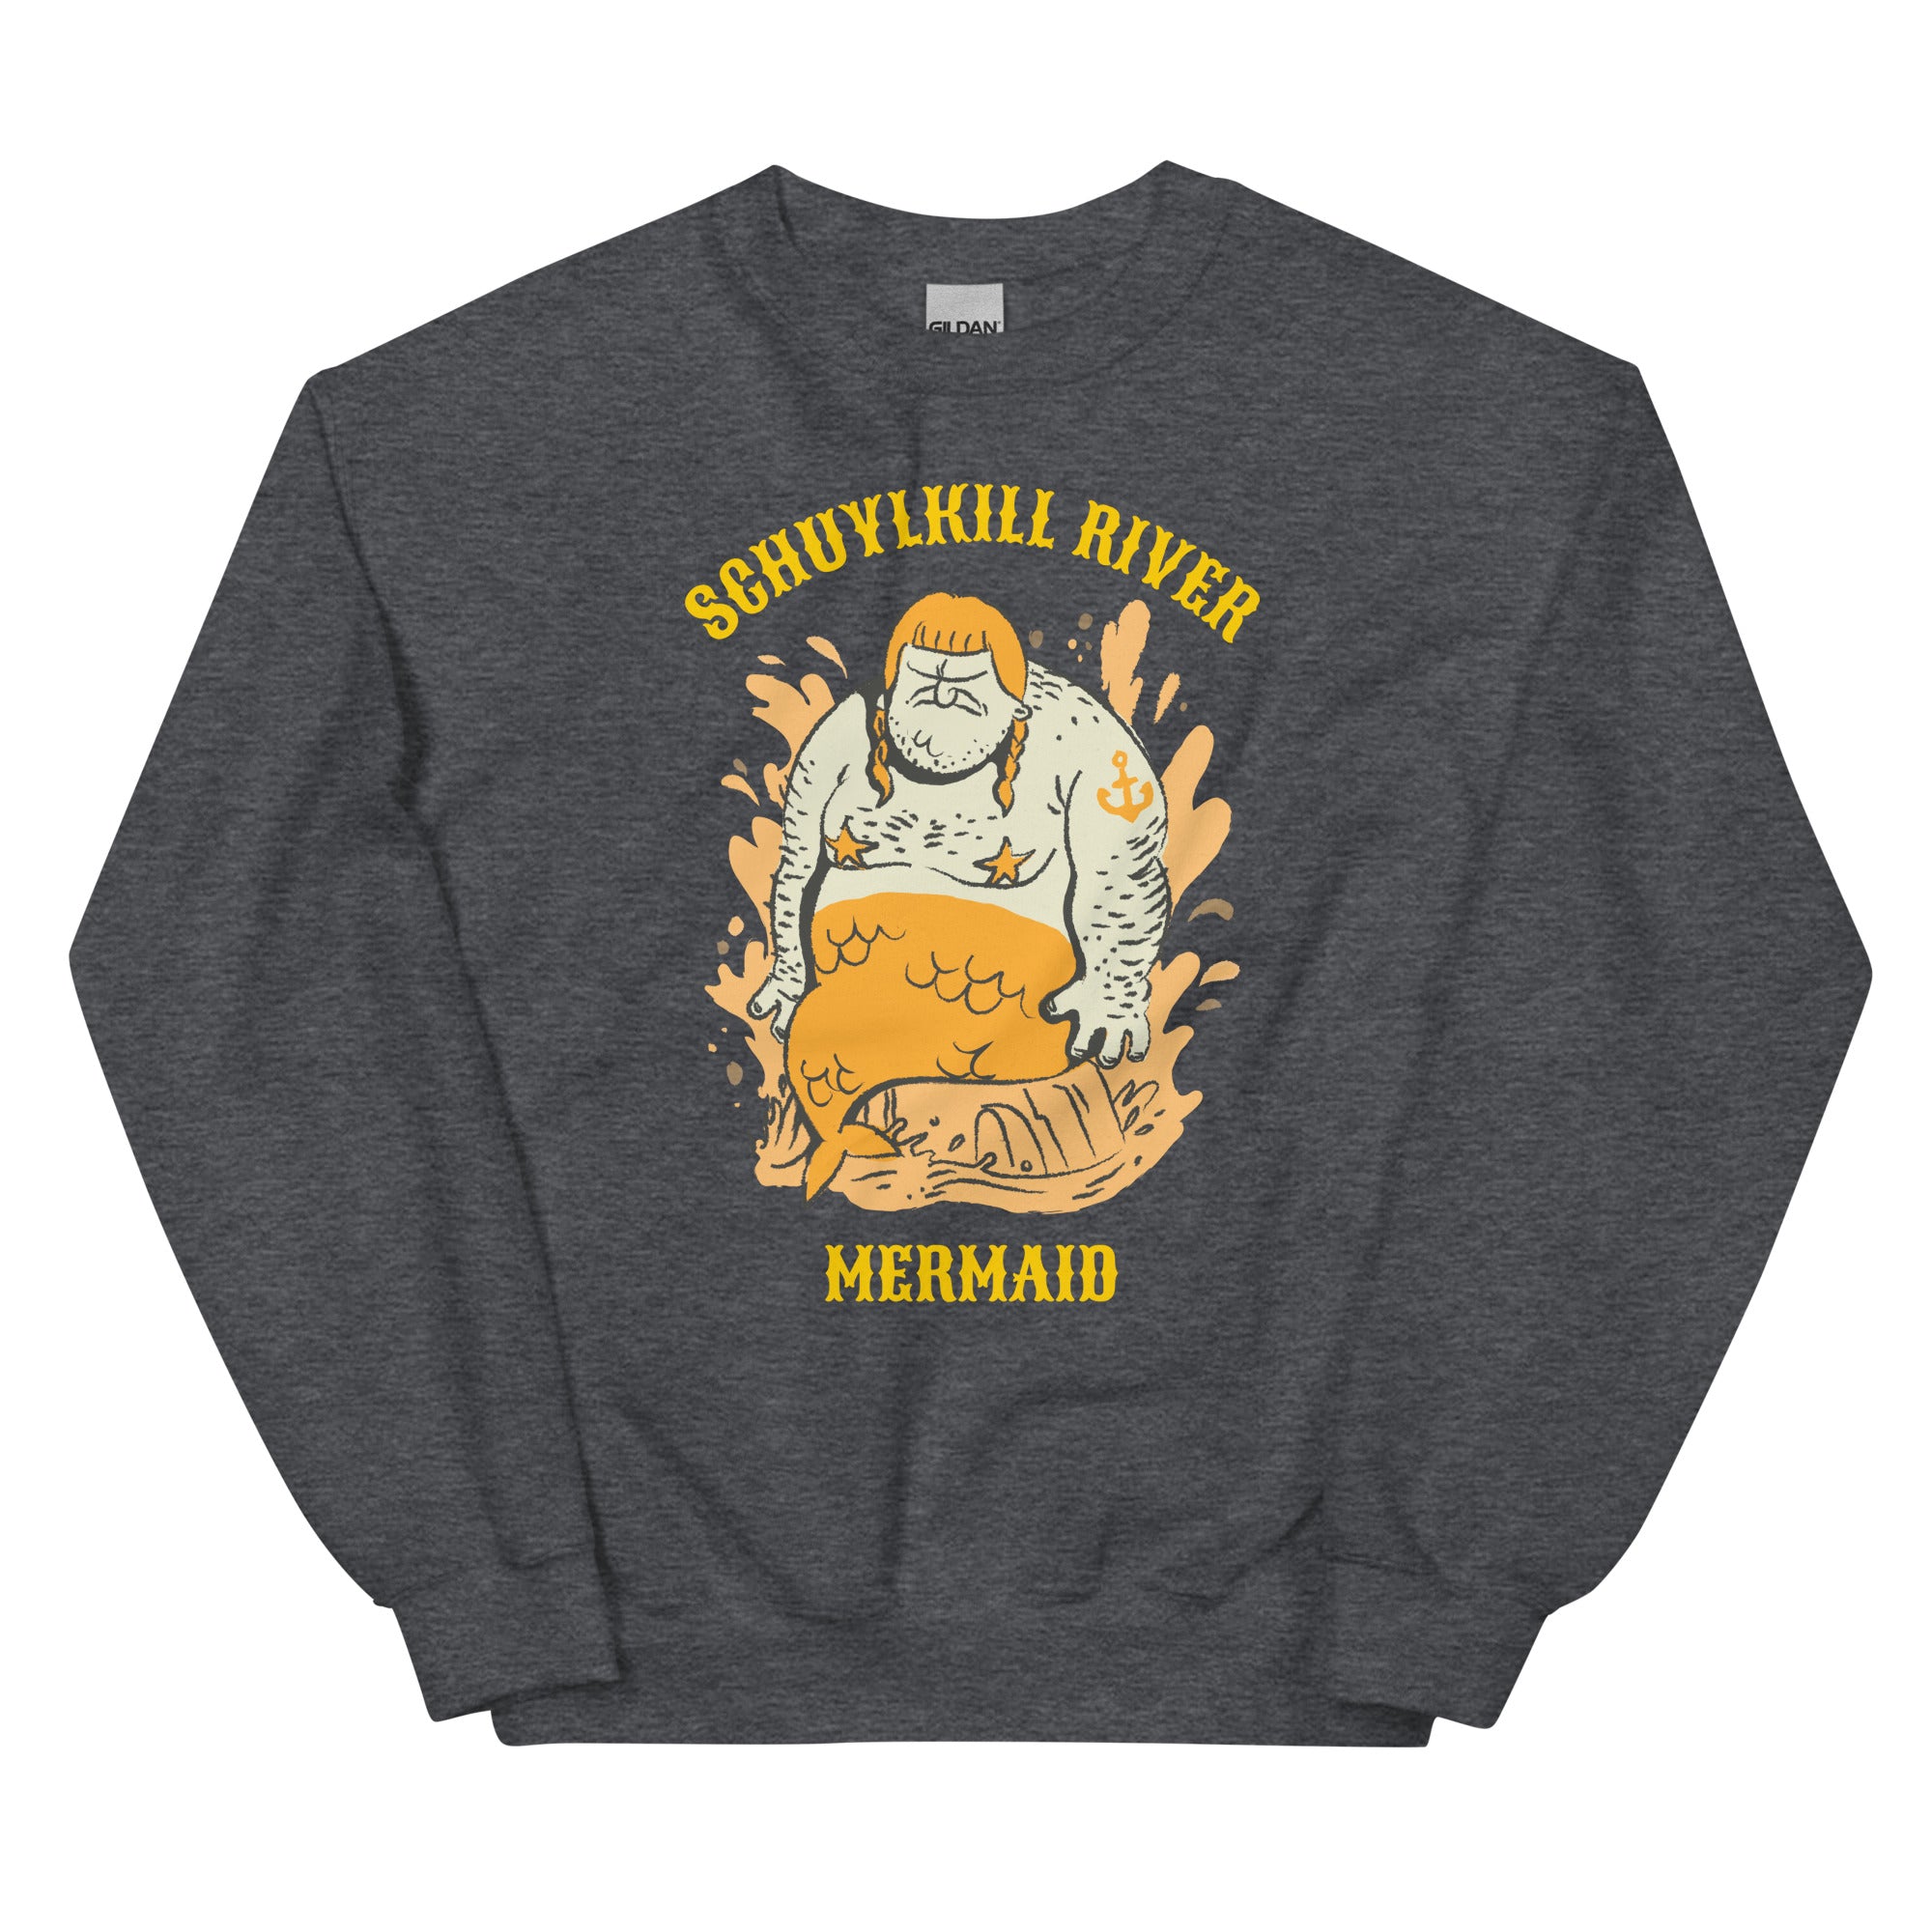 Funny Philadelphia Schuylkill River Mermaid dark heather grey sweatshirt from Phillygoat